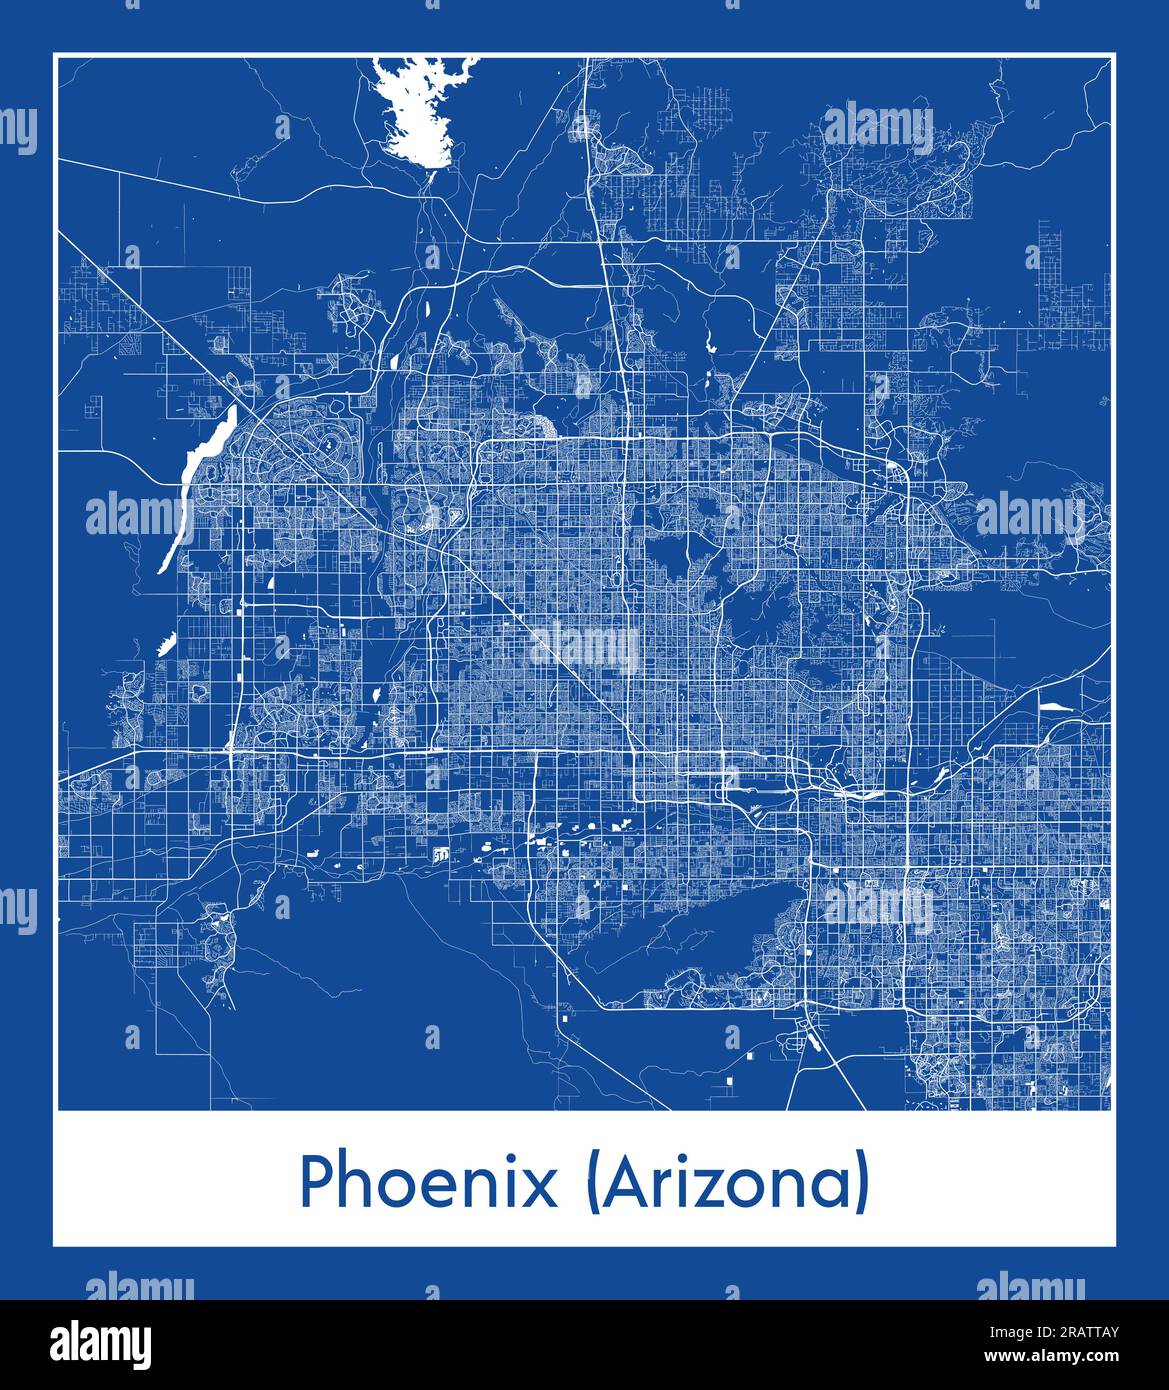 Phoenix Arizona United States North America City map blue print vector illustration Stock Vector